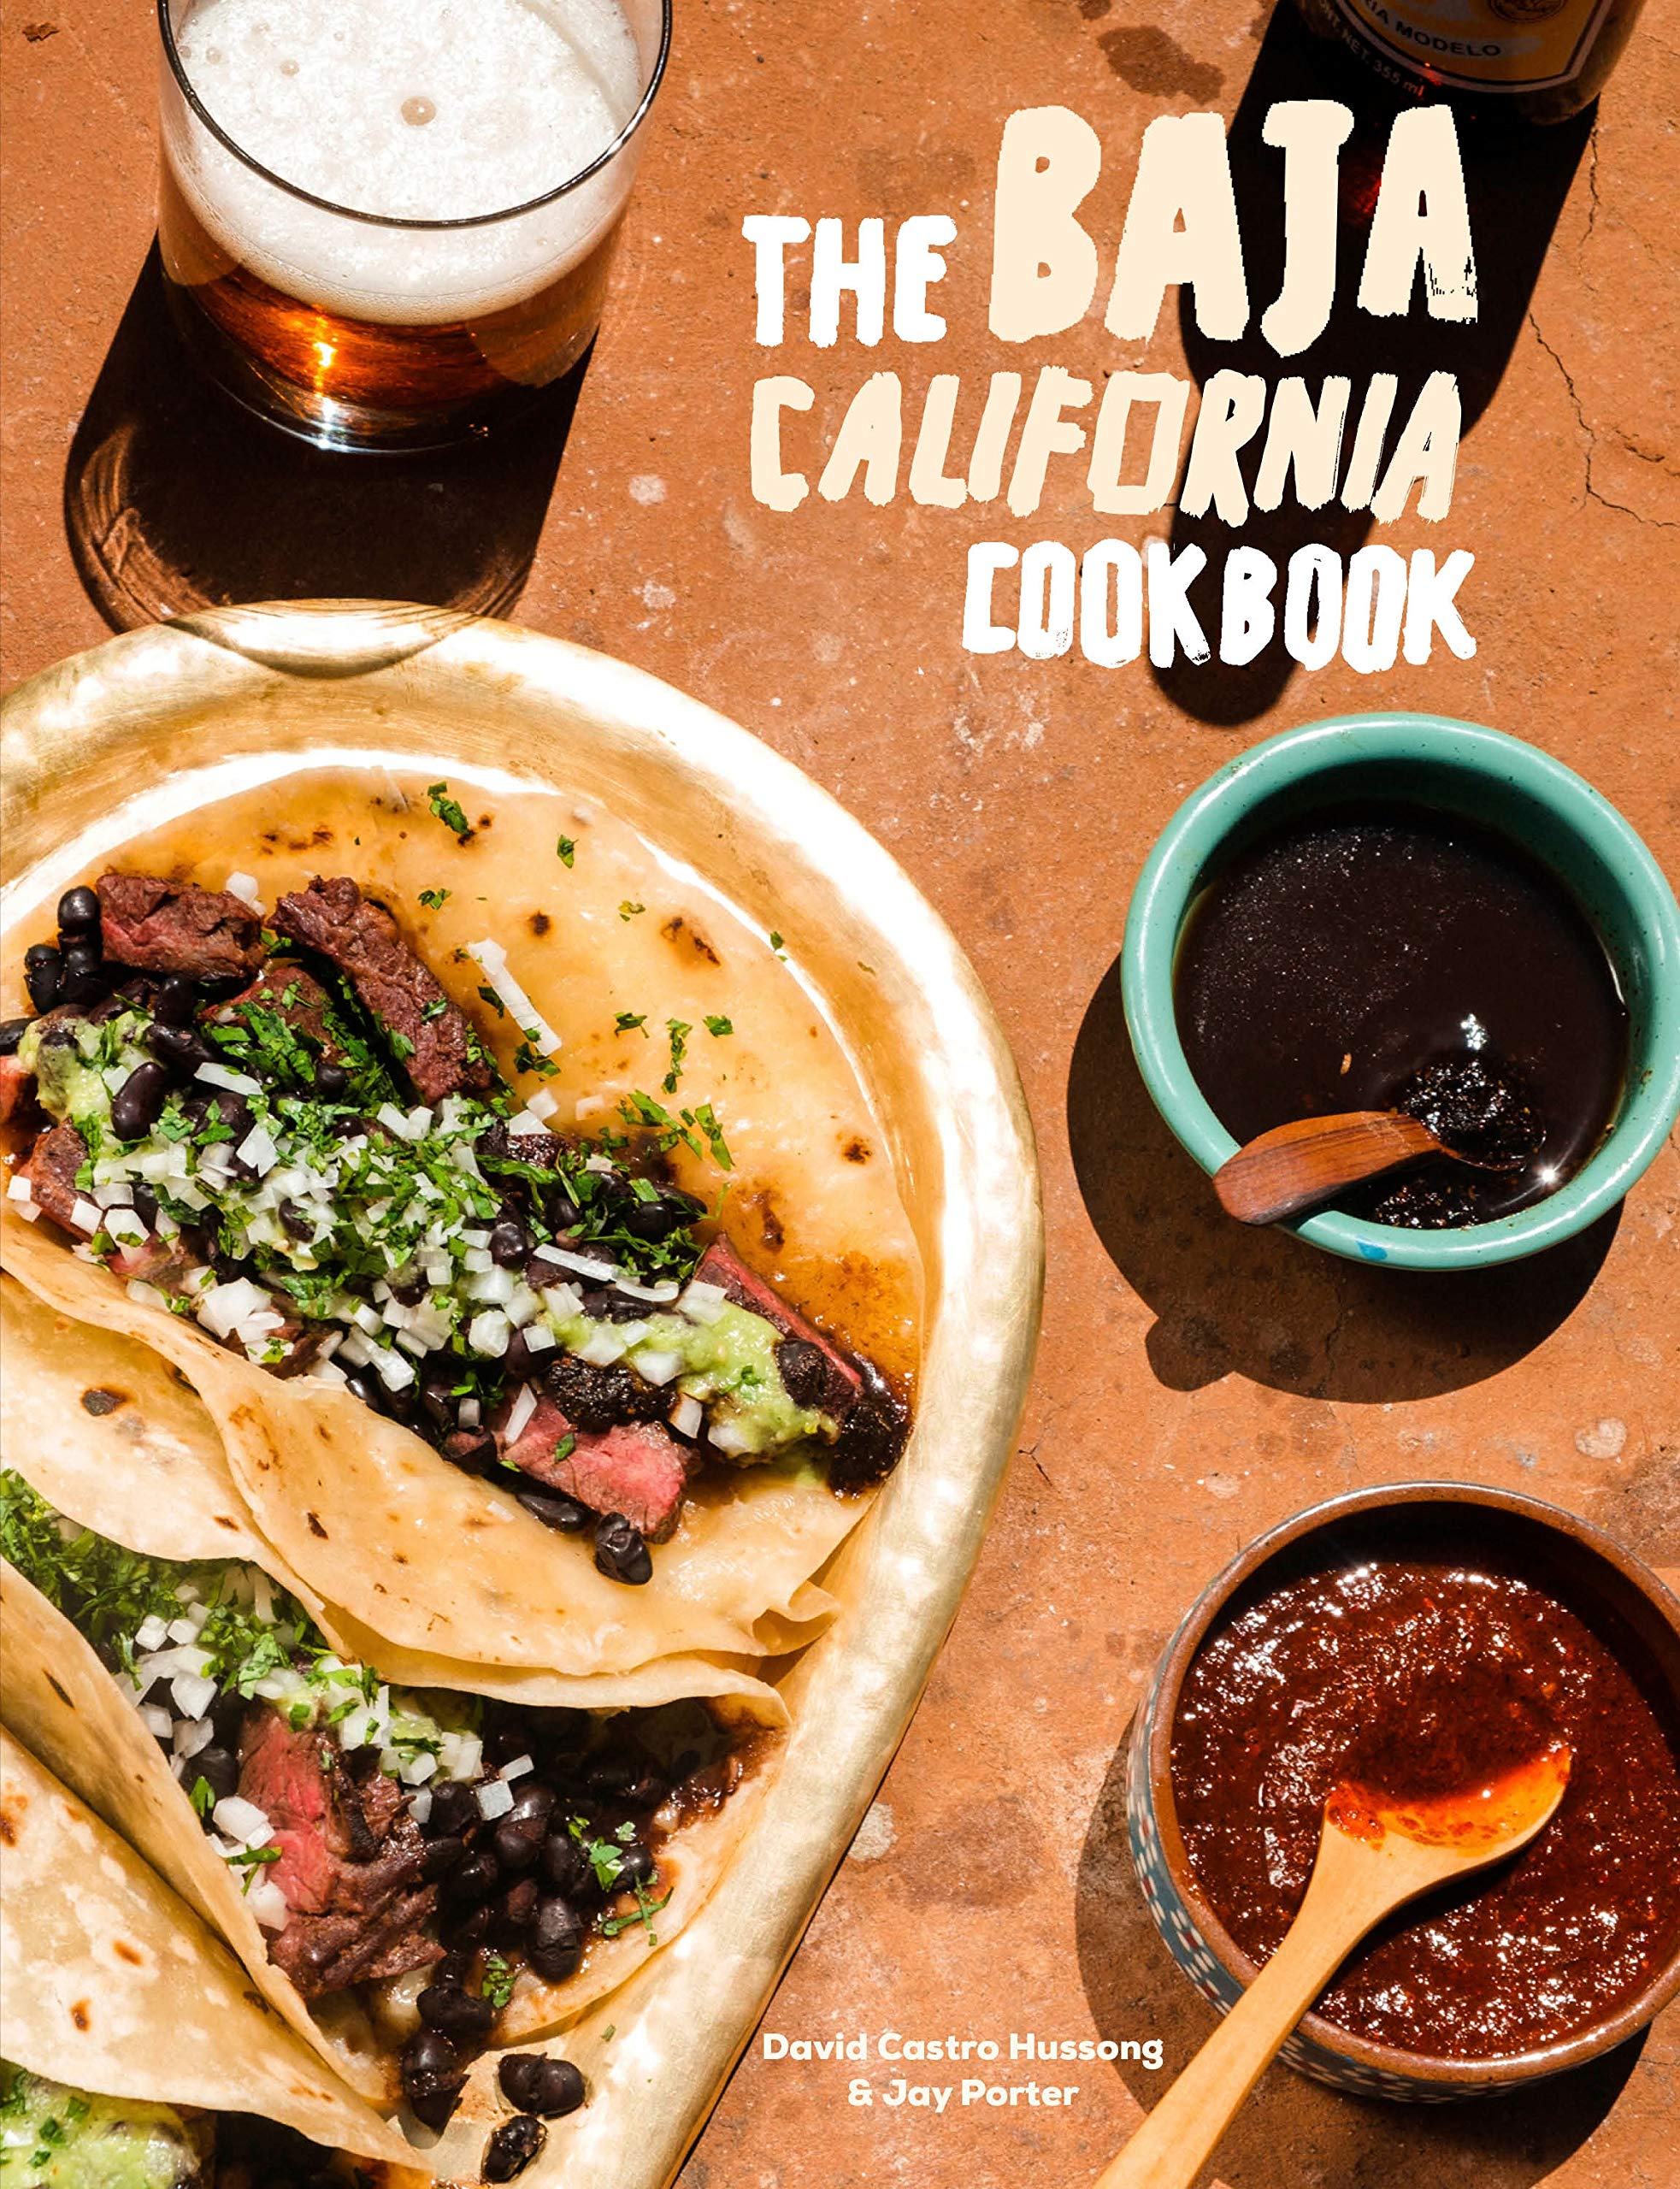 The Baja California Cookbook: Exploring the Good Life in Mexico ( David Castro Hussong, Jay Porter)